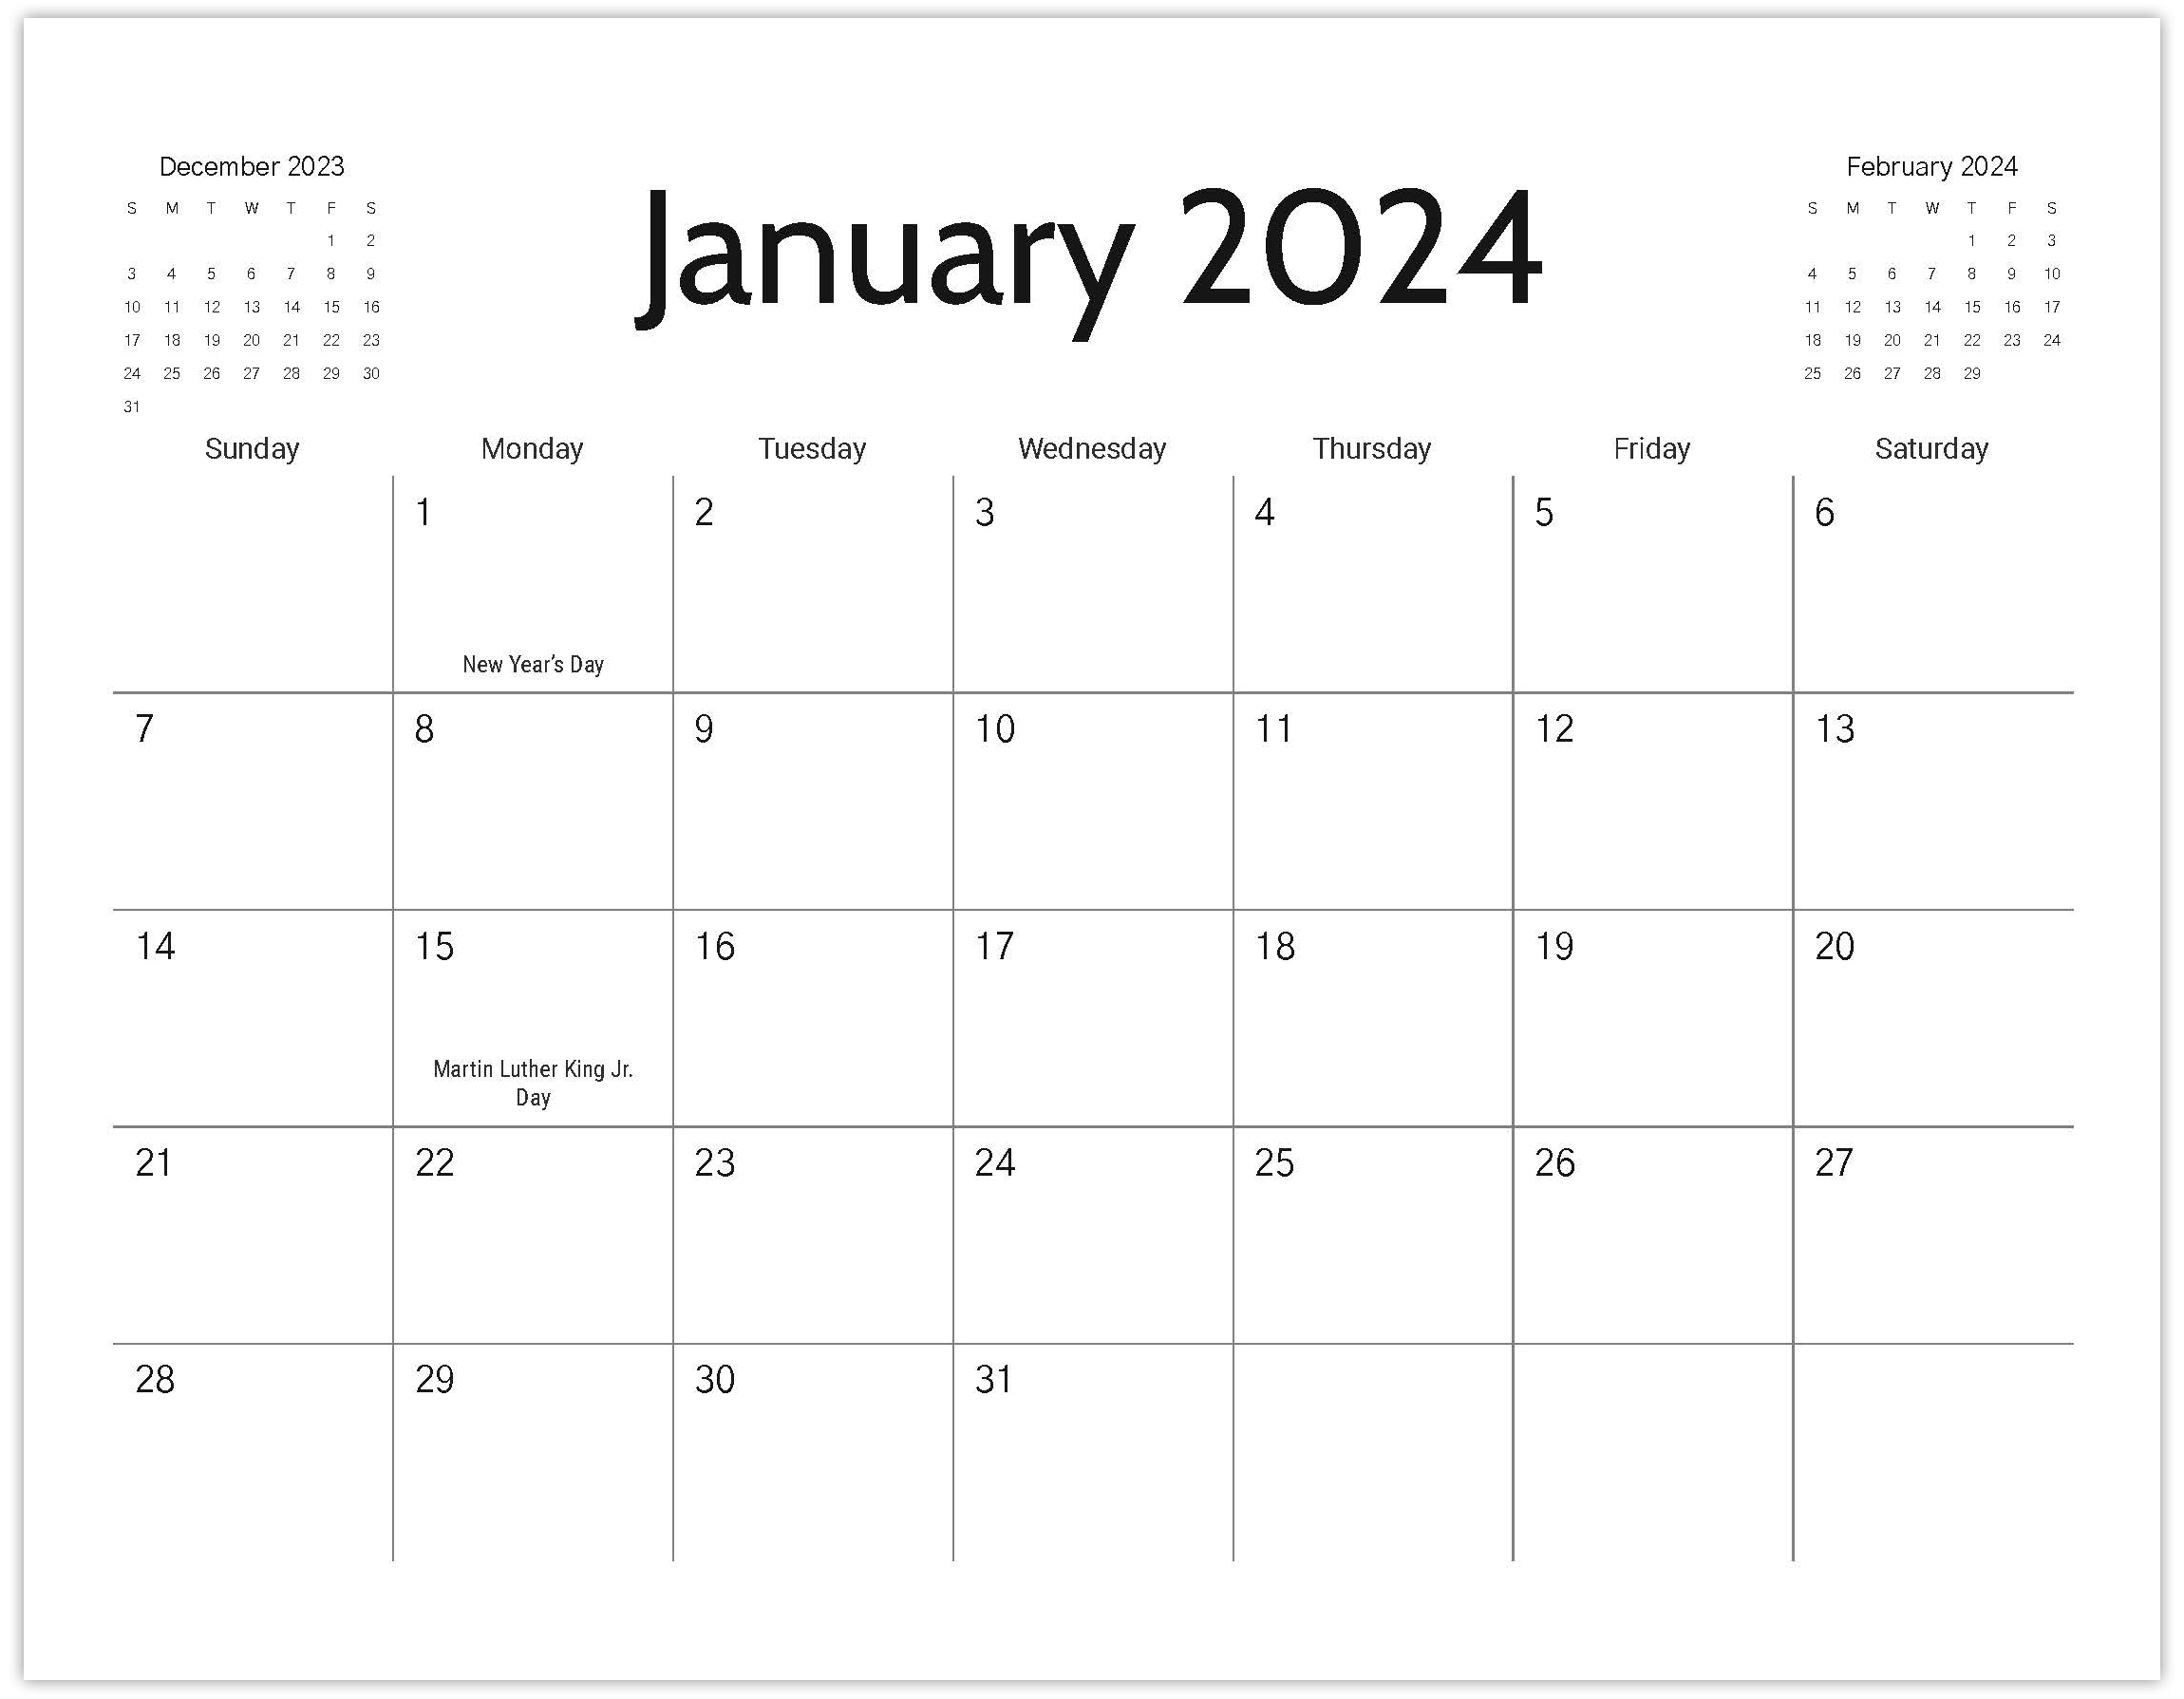 Free Printable Calendar 2024 | 2024 Printable Calendar By Month with Holidays